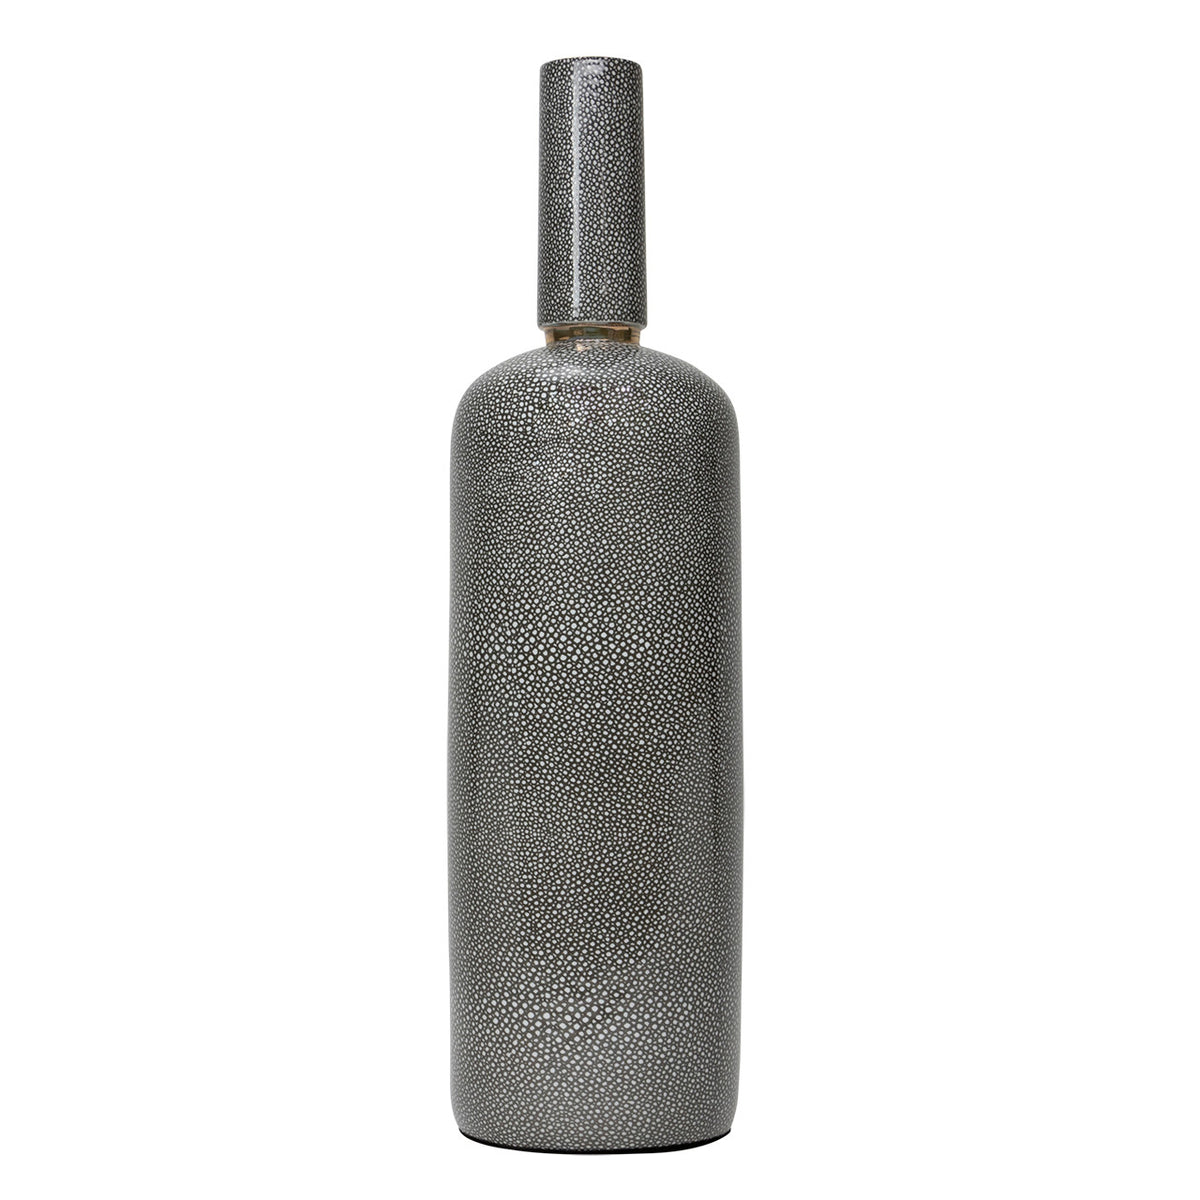 Belton Decorative Bottle